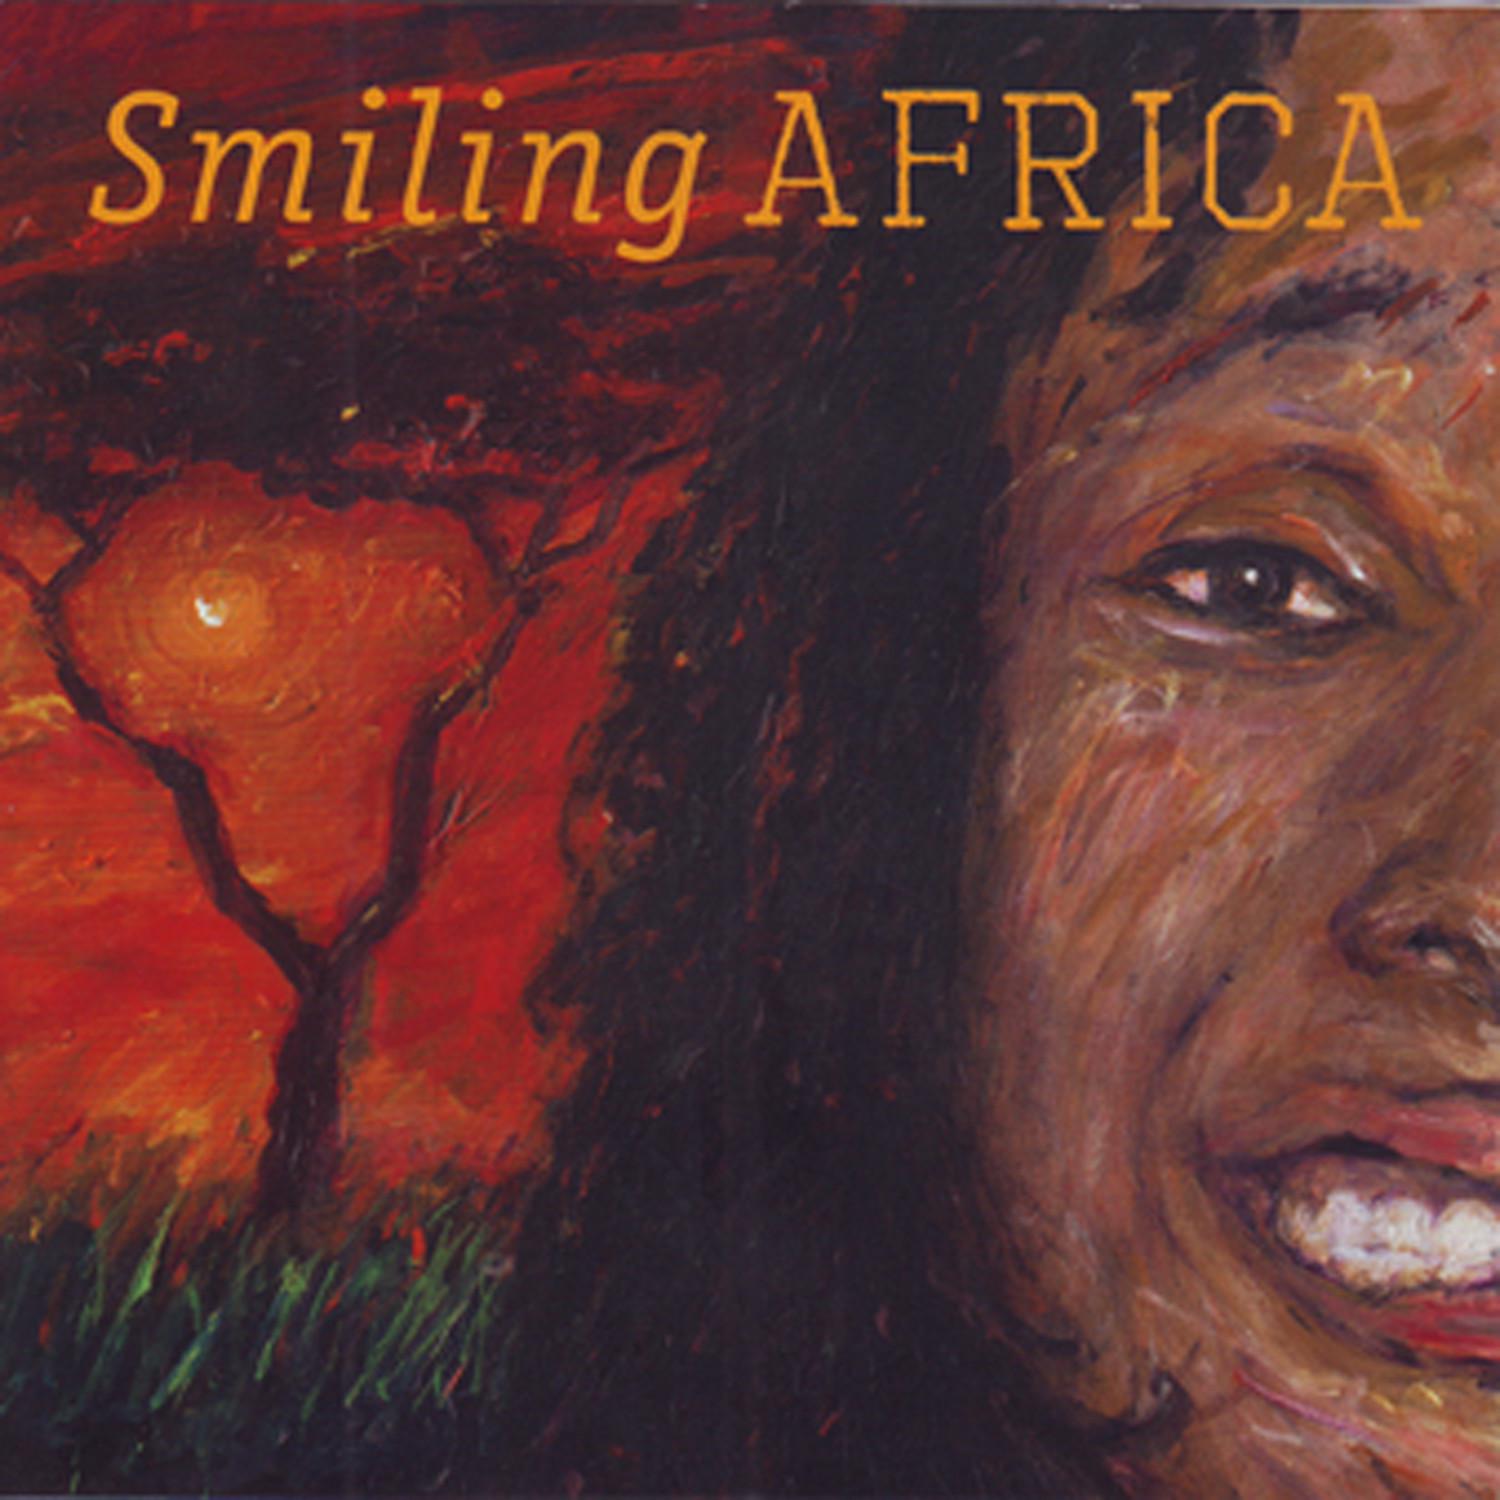 Smiling Africa